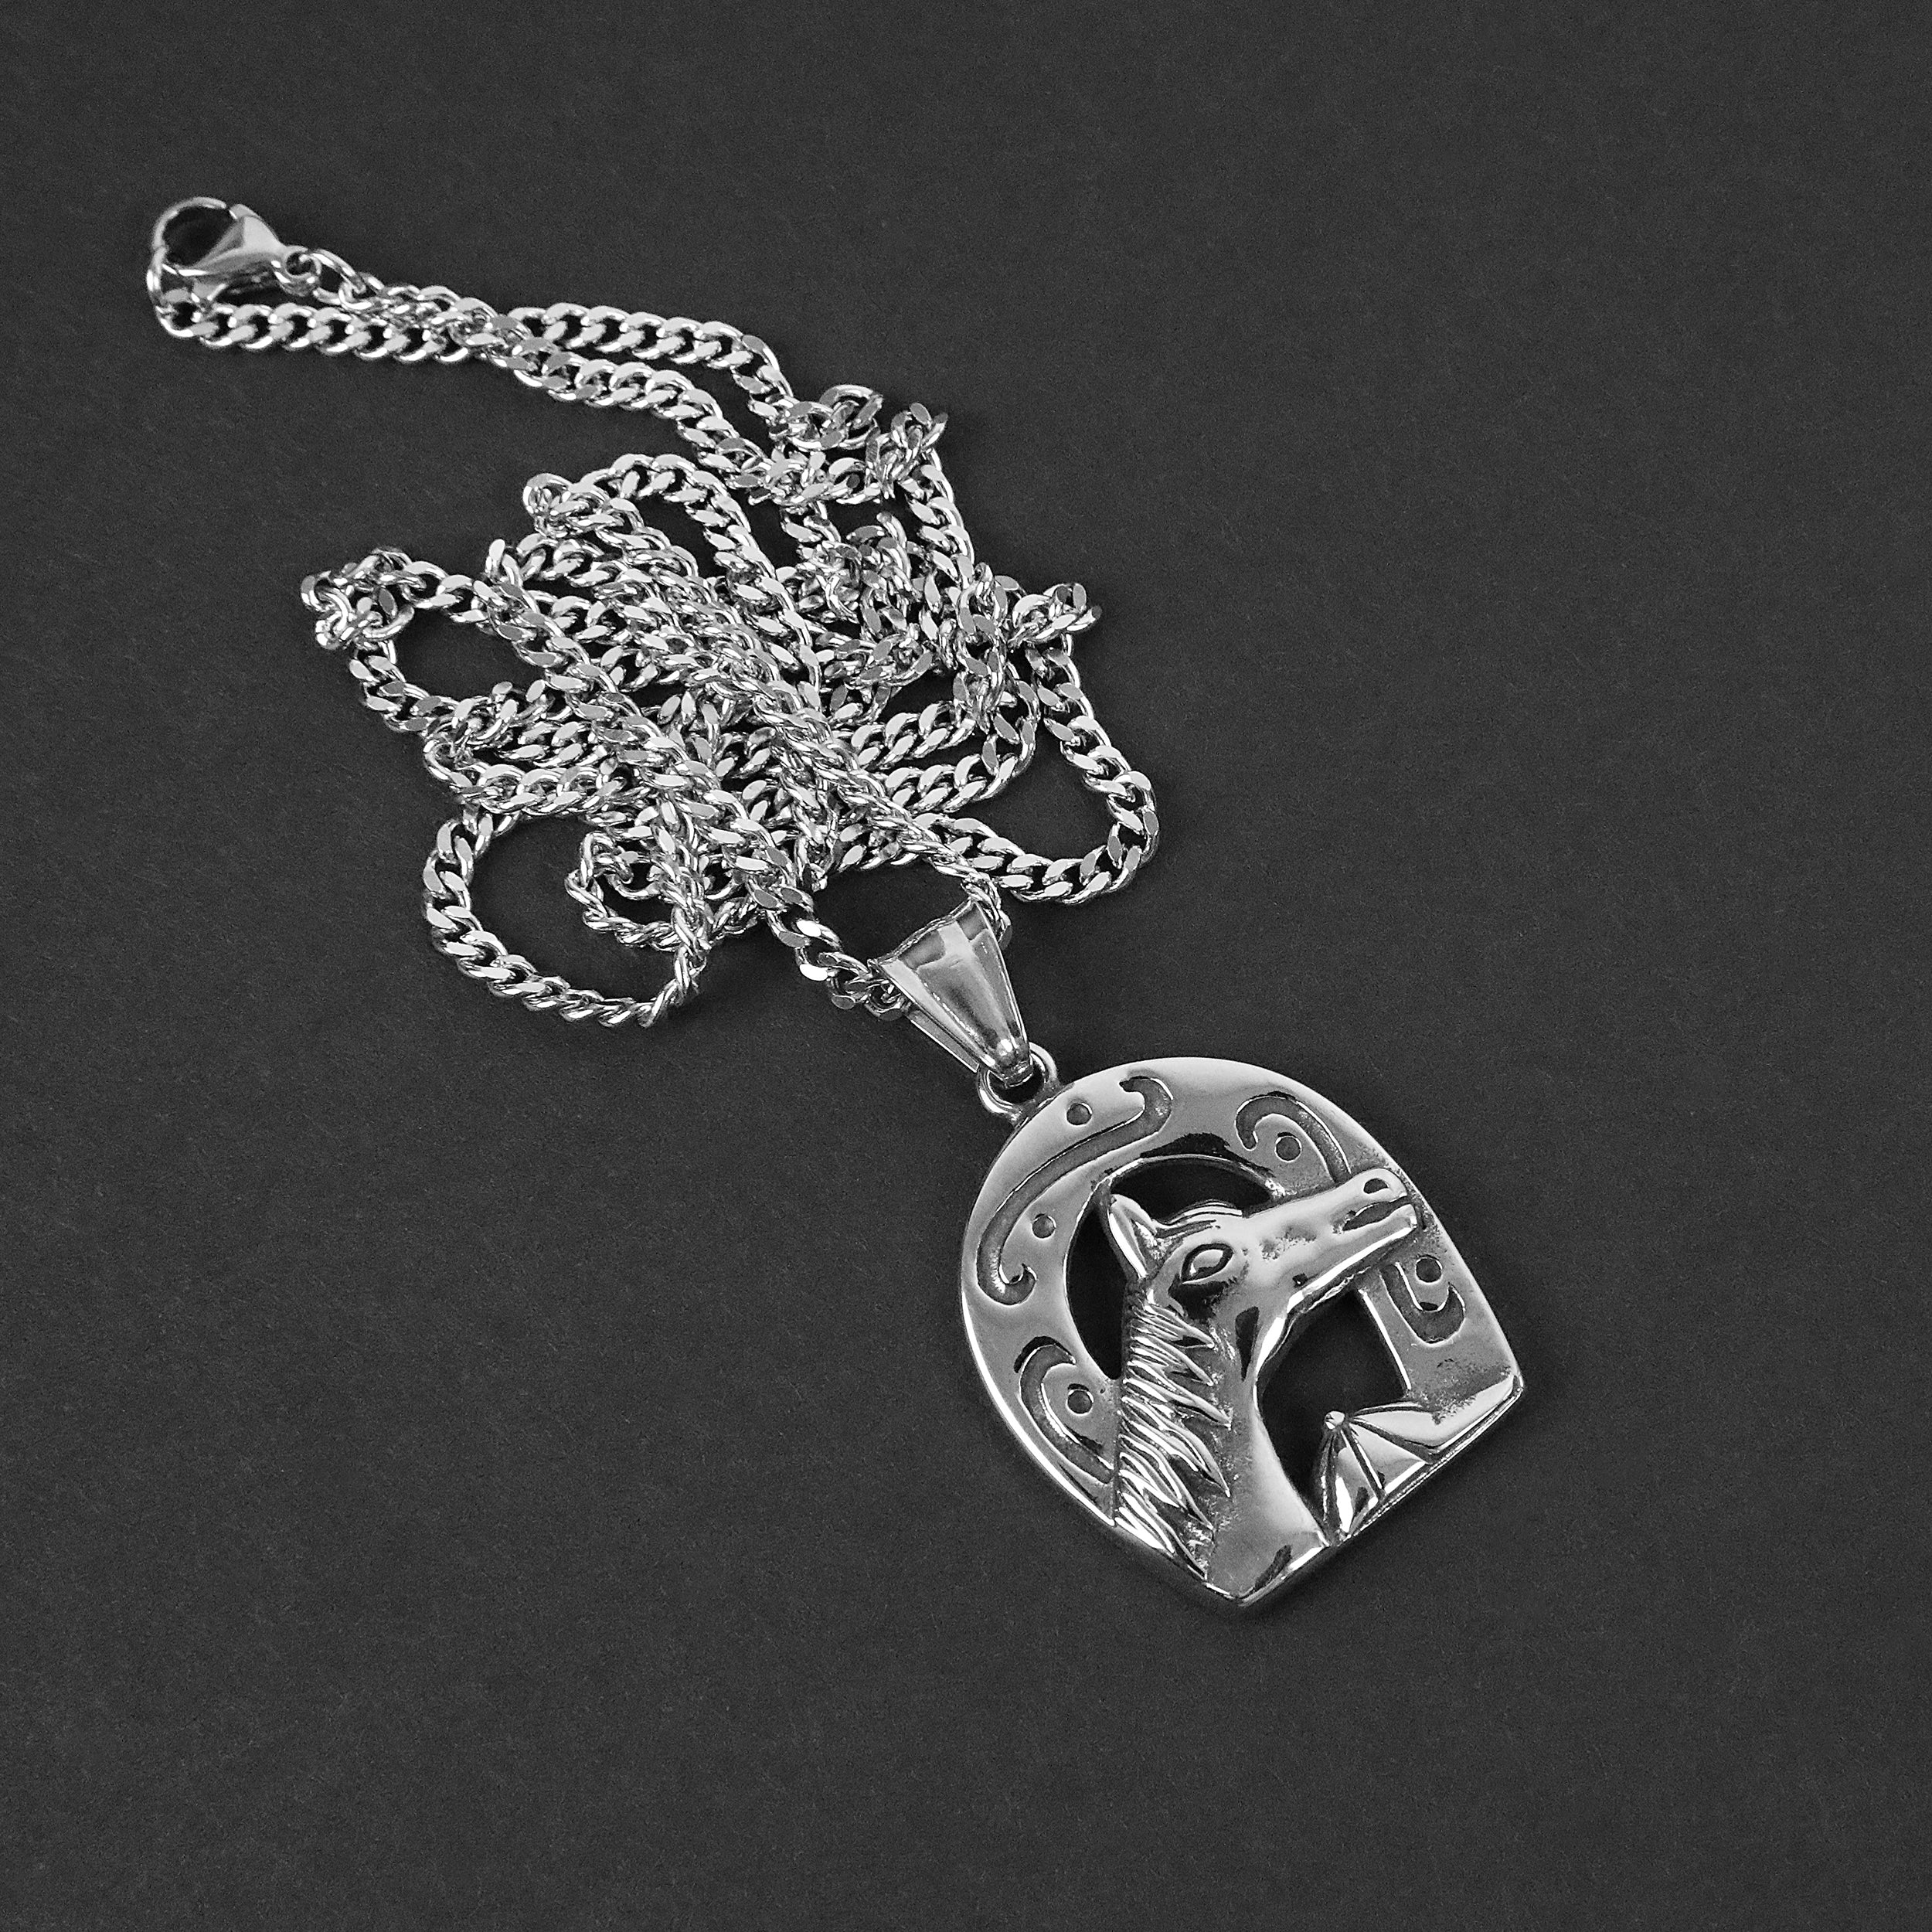 Lucky Stallion Amulet Necklace - Silver